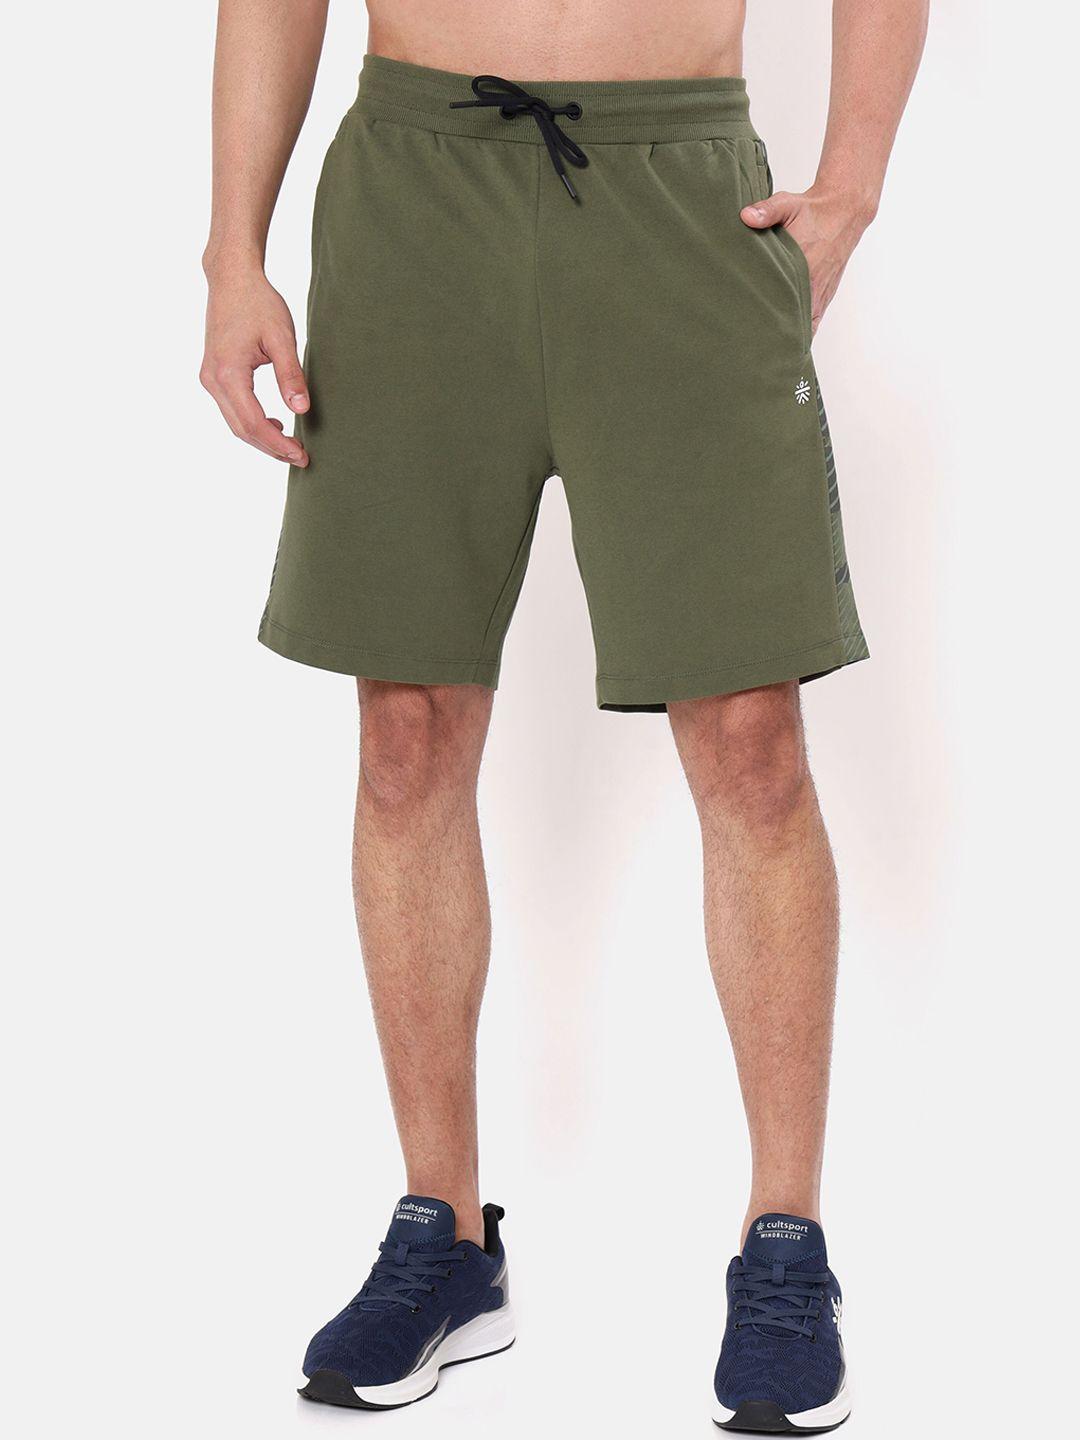 cultsport men olive green cotton running sports shorts